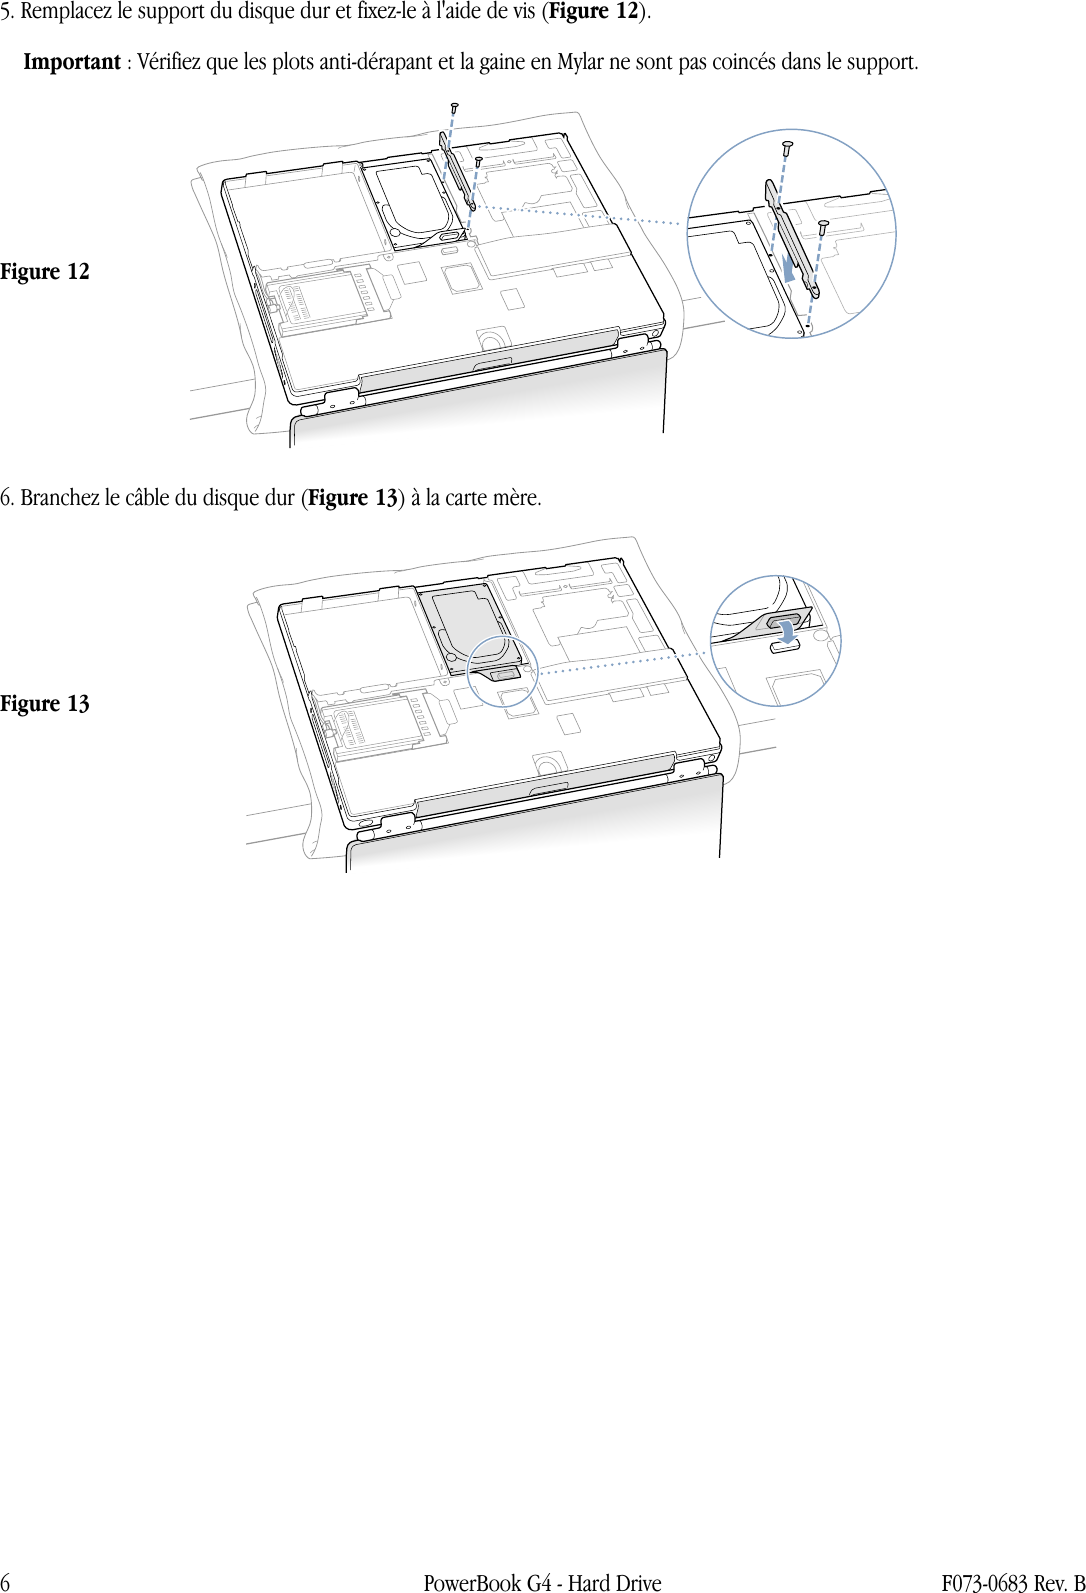 Page 6 of 8 - Apple PowerBook G4 (DVI) Hard Drive User Manual Power Book G4 (DVI, 1GHz/867MHz) - Disque Dur Instructions De Remplacement Pbg4dvi-hd-cip